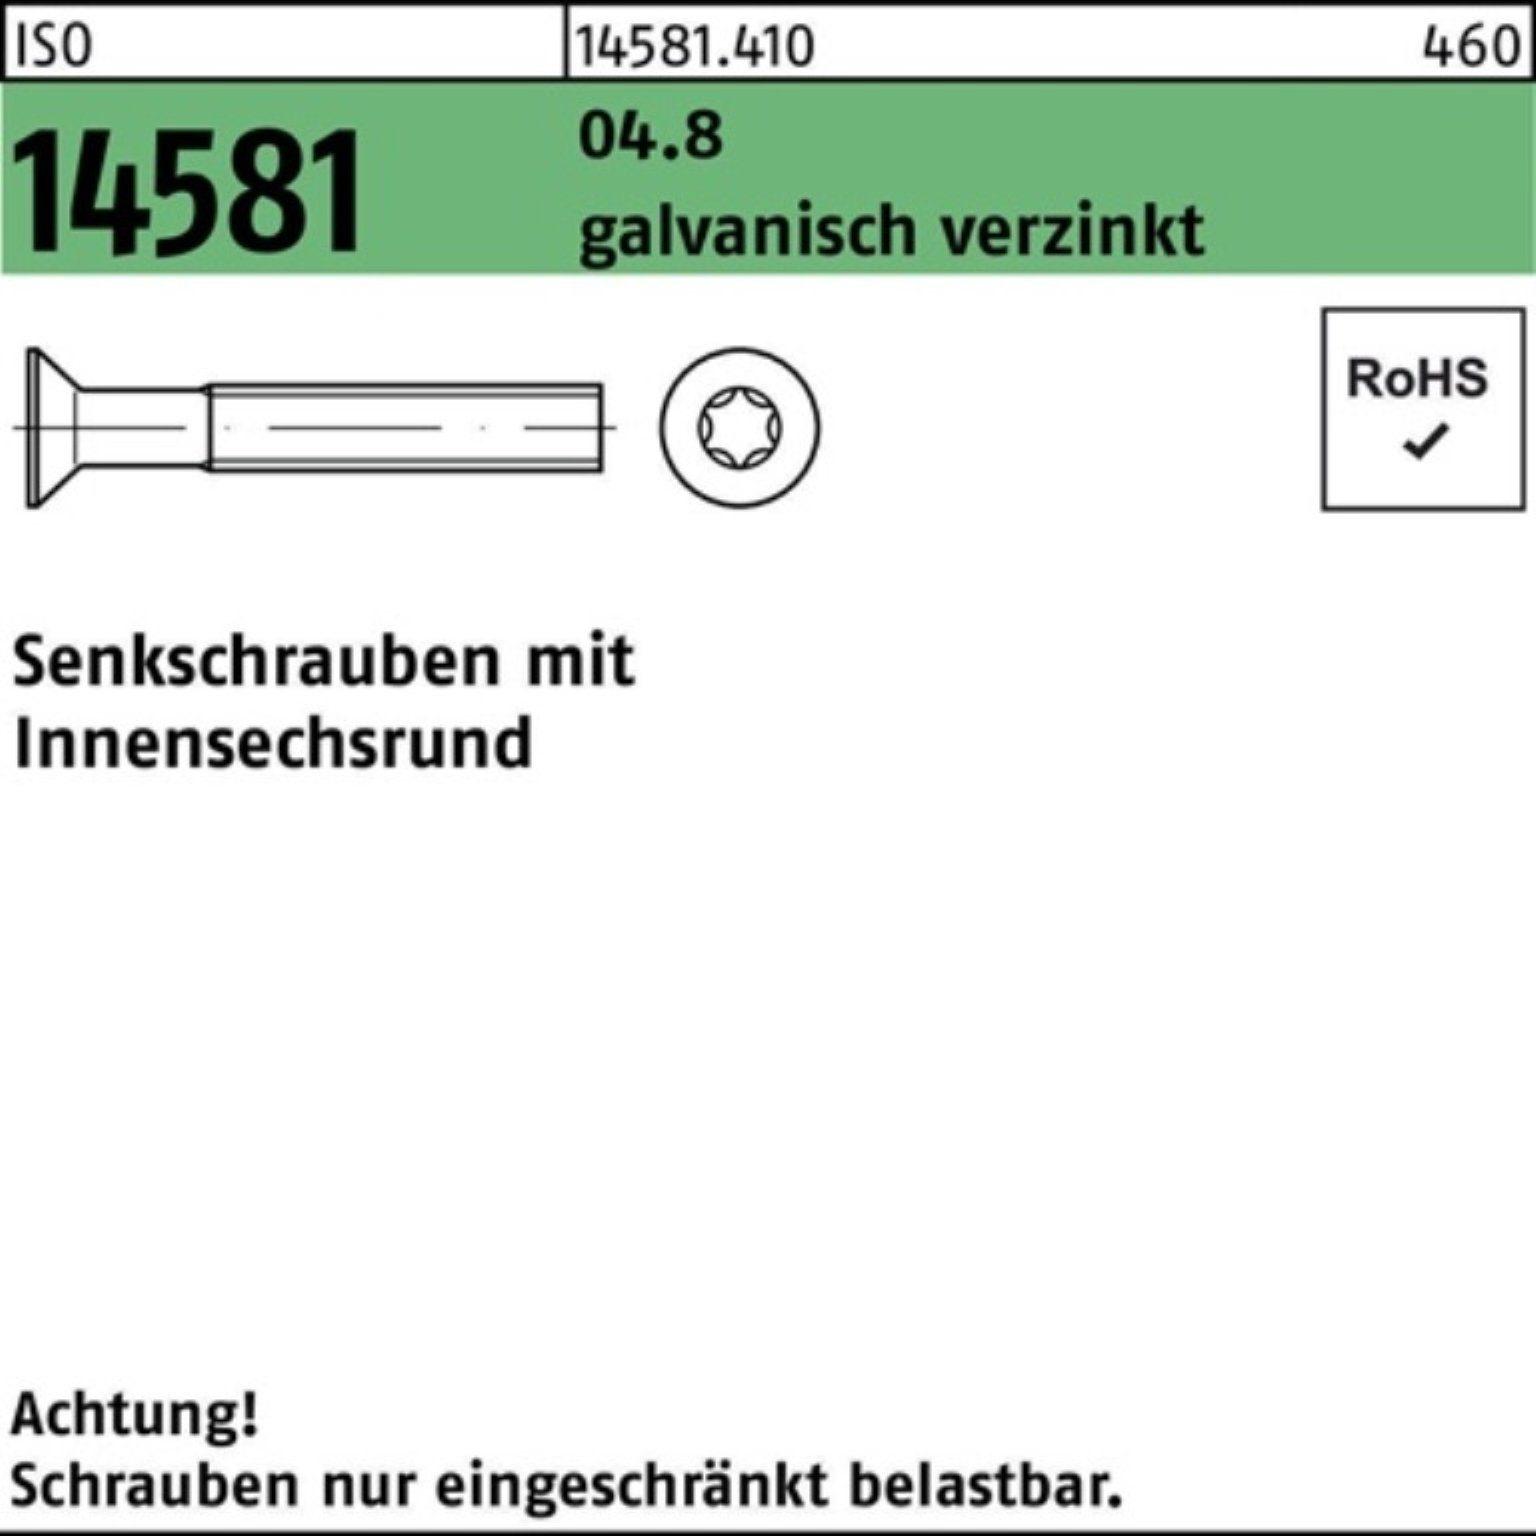 Reyher Senkschraube 200er Pack Senkschraube ISO 14581 ISR M6x60 T30 04.8 galv.verz. 200St.